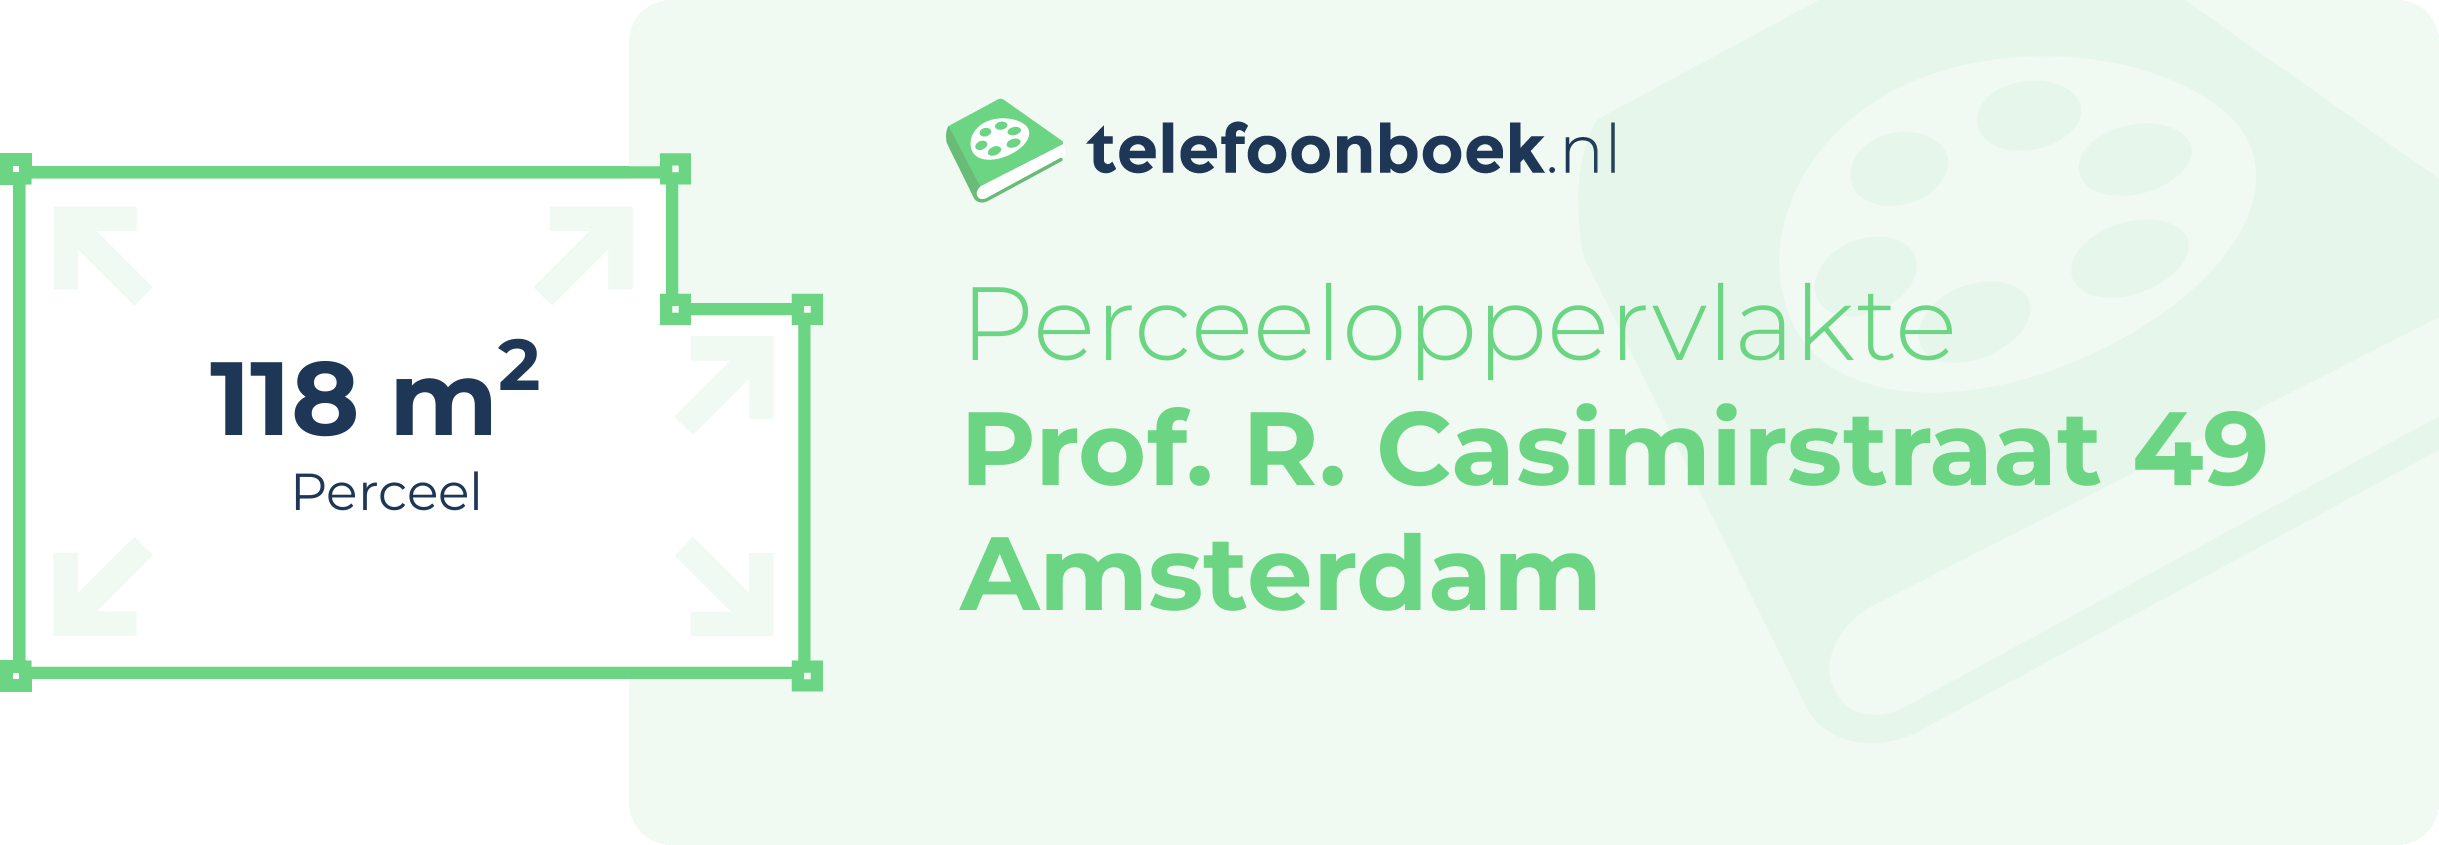 Perceeloppervlakte Prof. R. Casimirstraat 49 Amsterdam